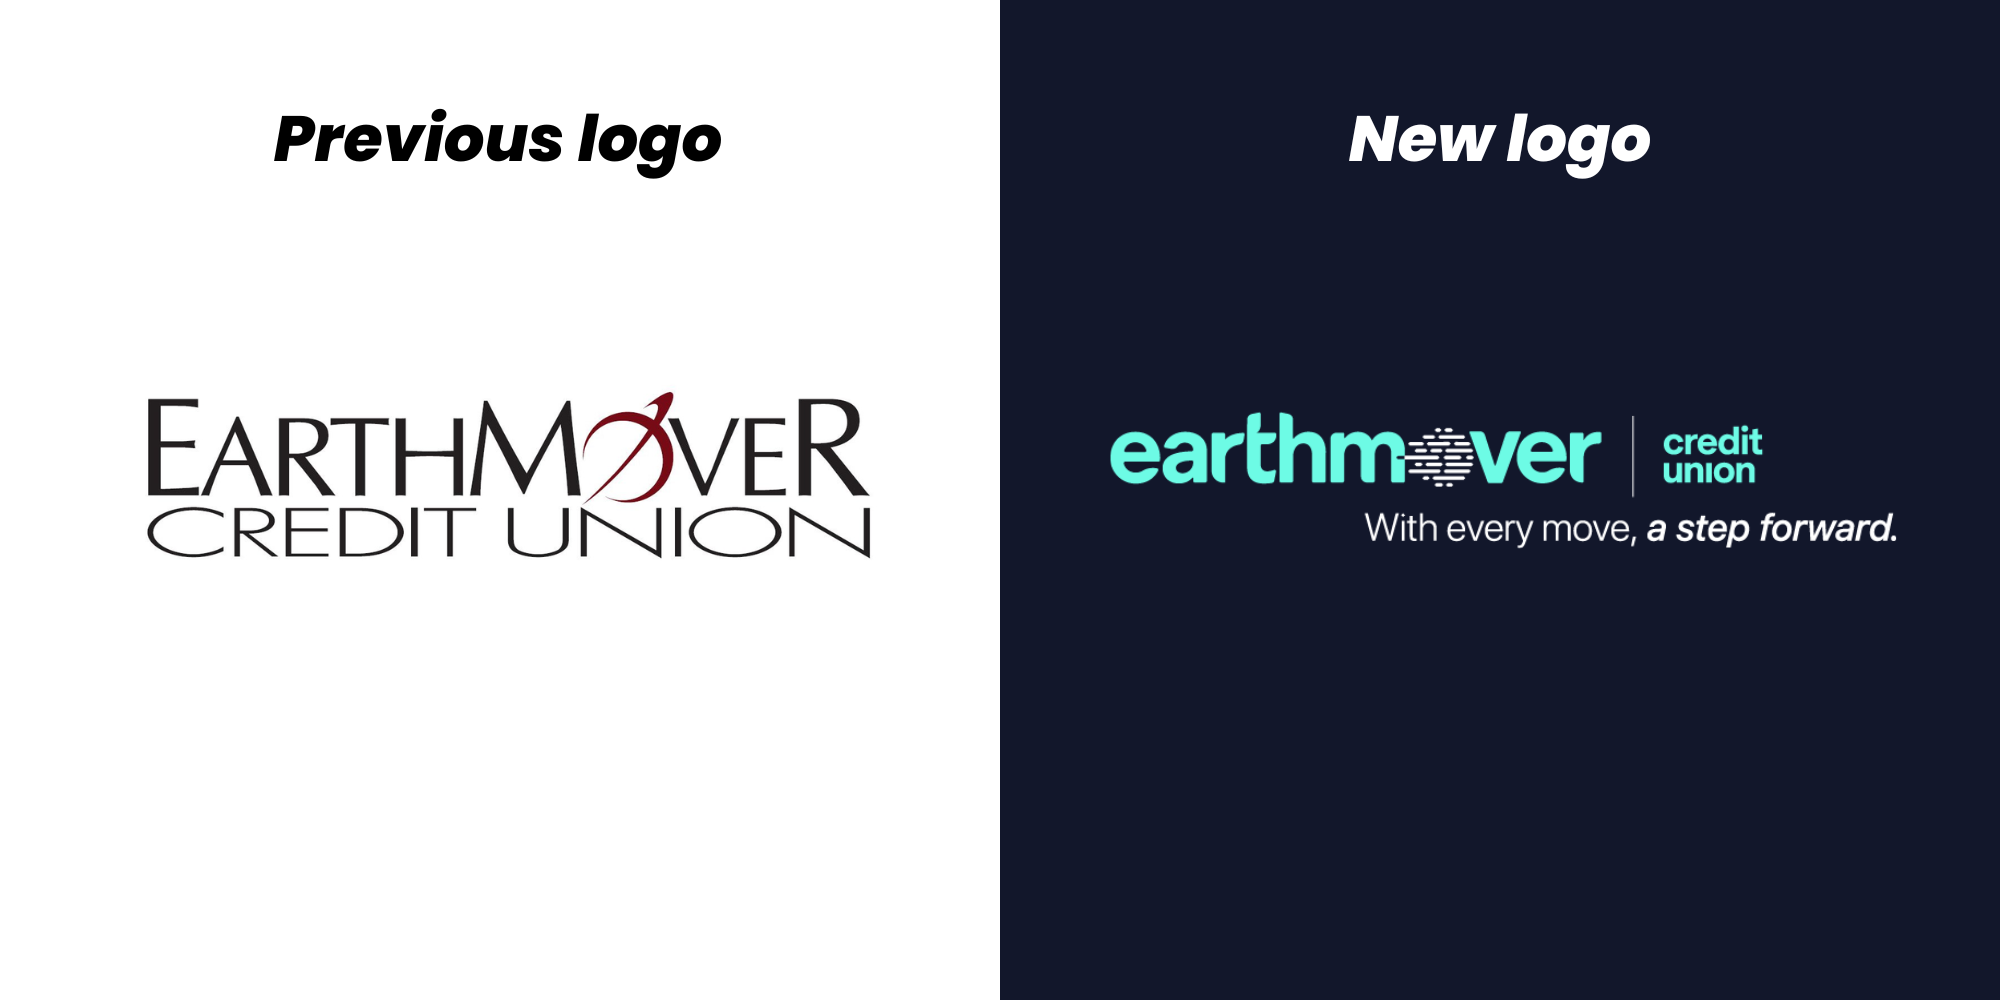 Previous Earthmover Credit Union Logo New Earthmover Credit Union logo